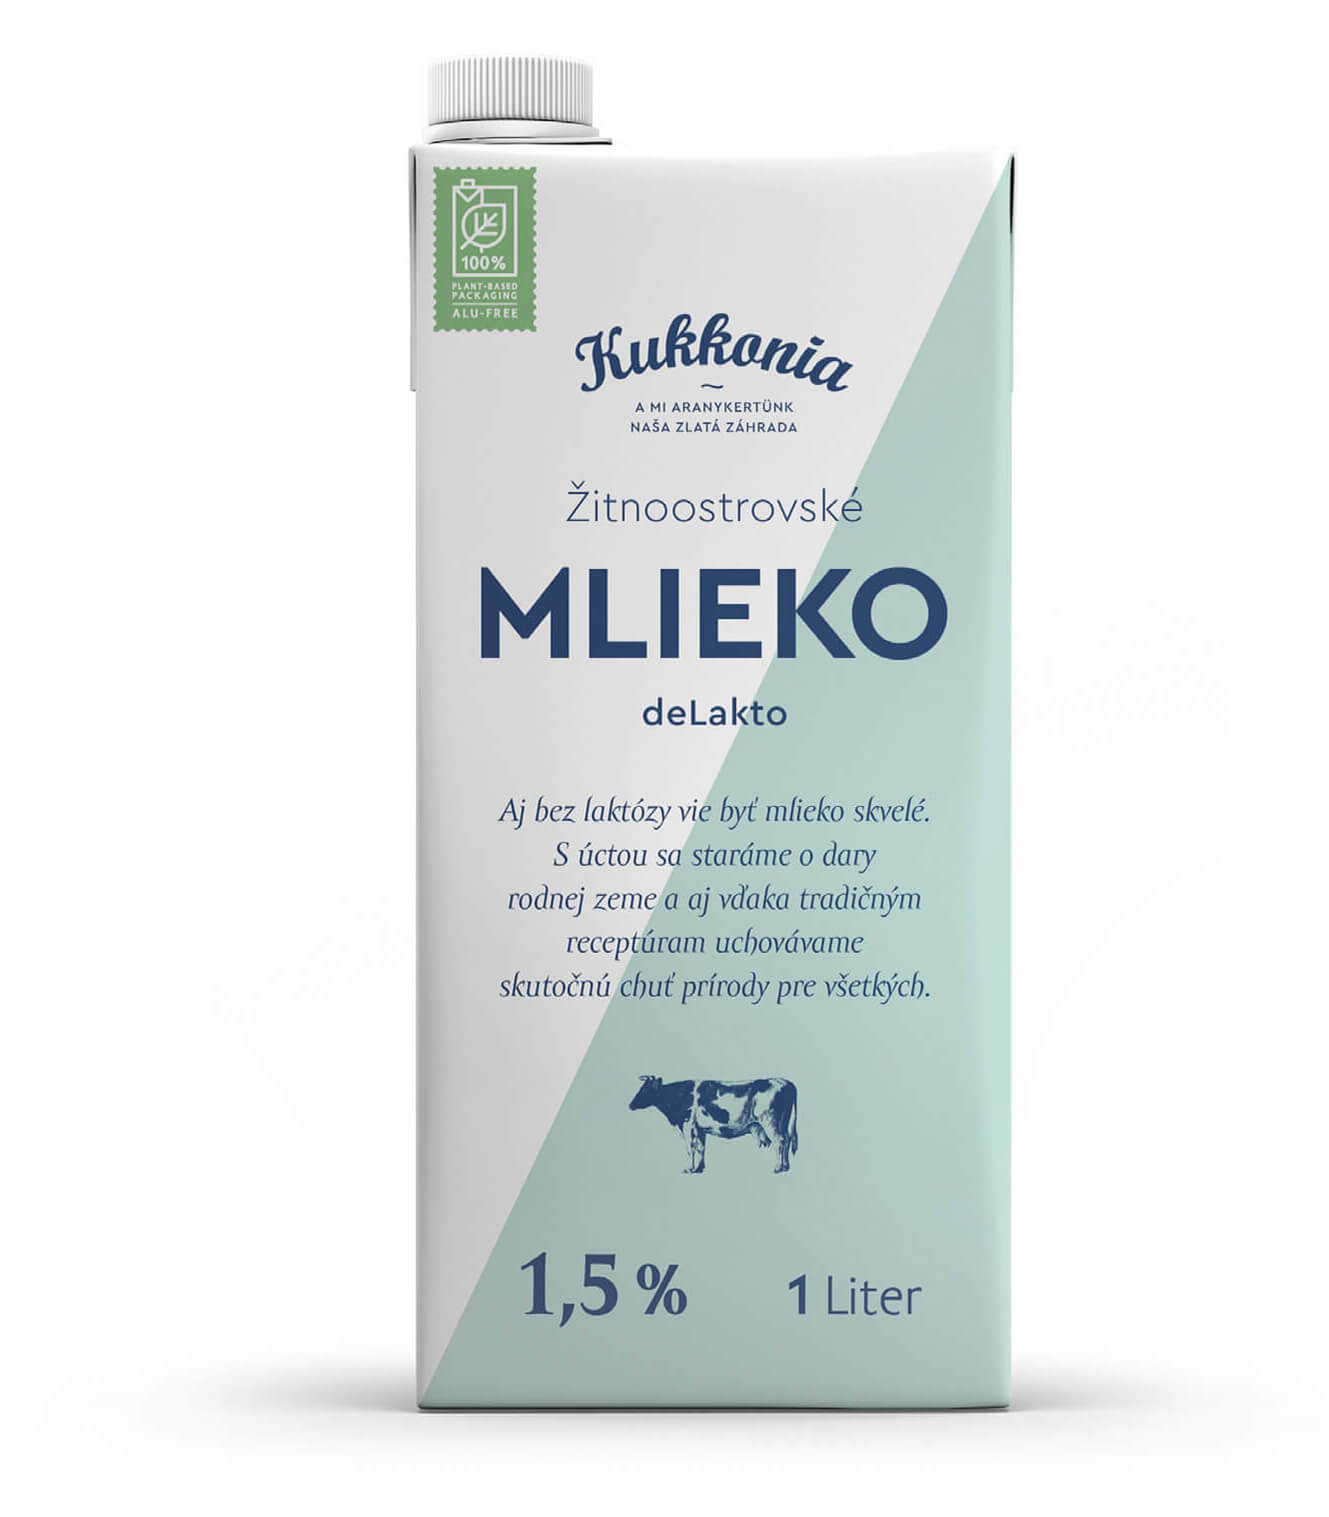 Kukkonia Milk delacto-1